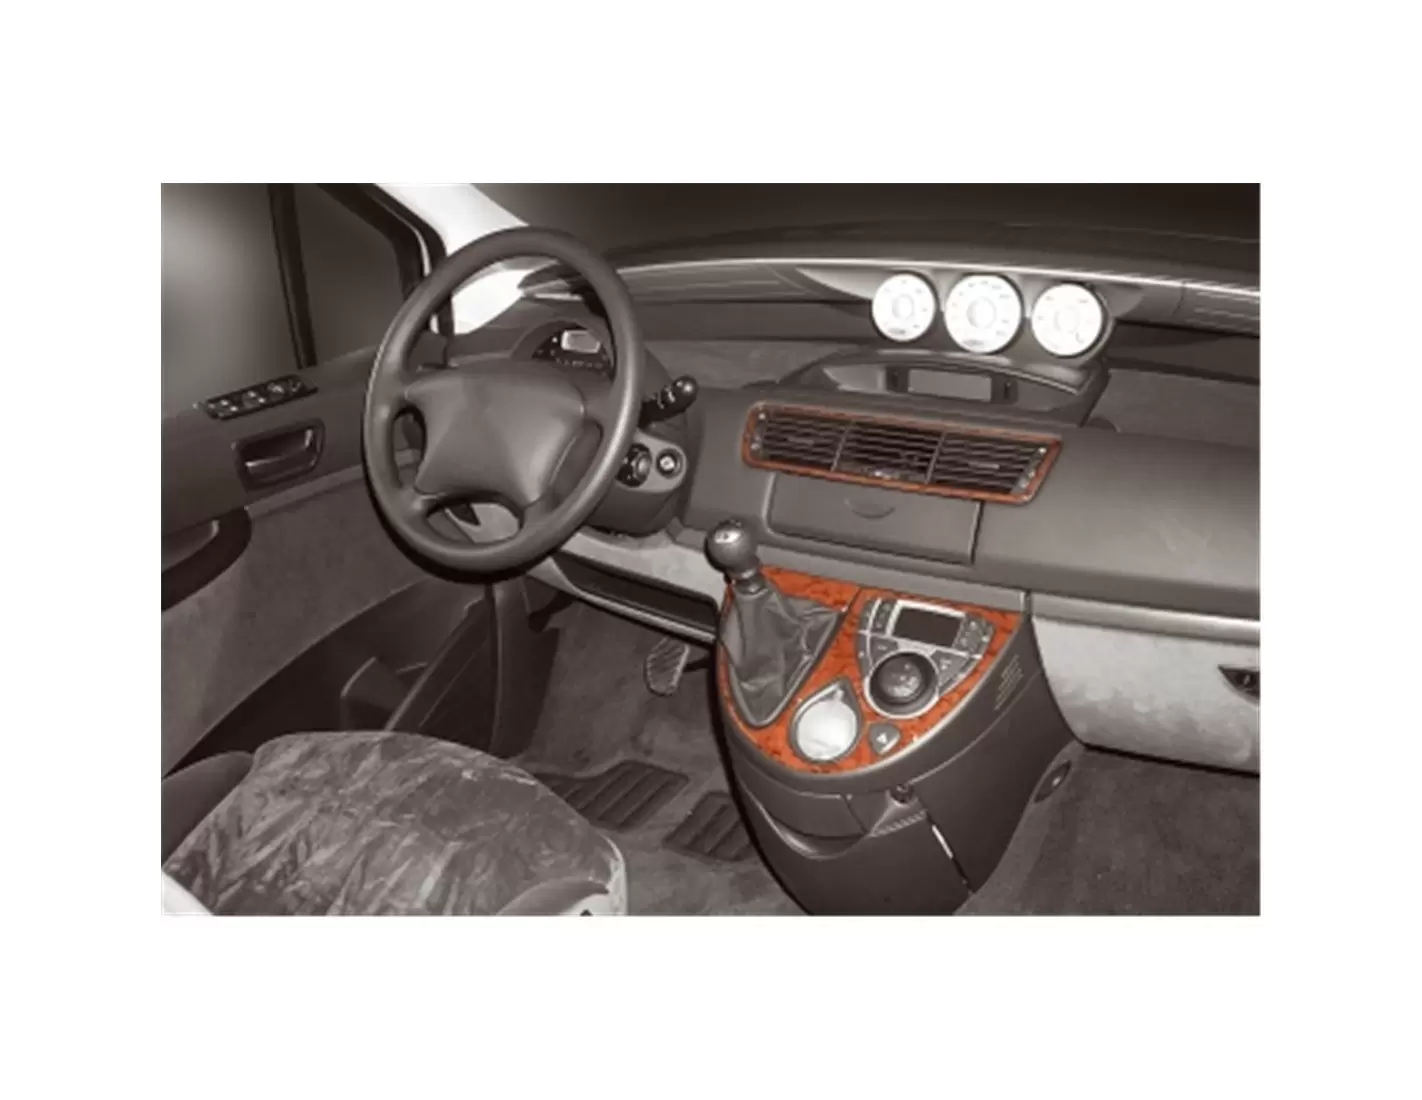 Peugeot 807 02.2002 3M 3D Interior Dashboard Trim Kit Dash Trim Dekor 4-Parts